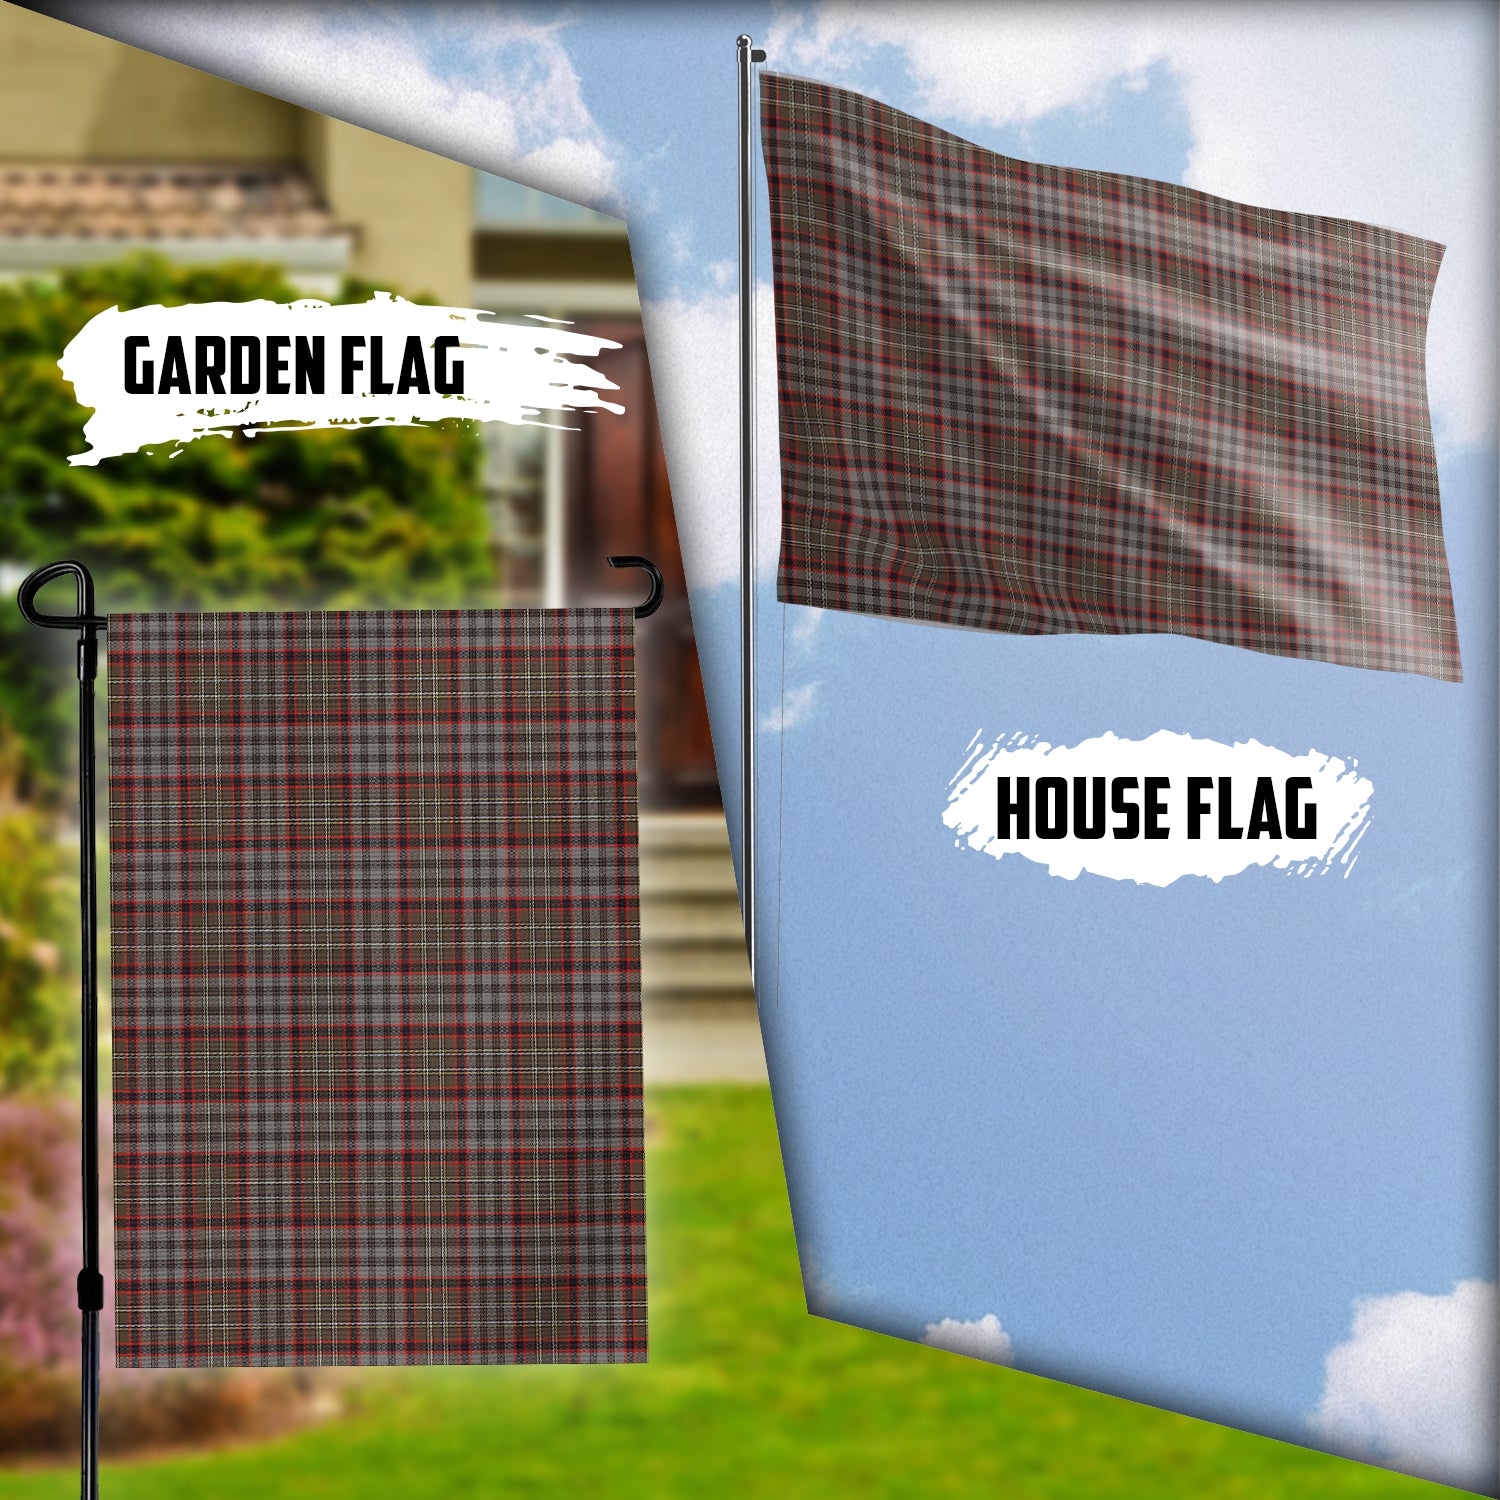 nicolson-hunting-weathered-tartan-flag